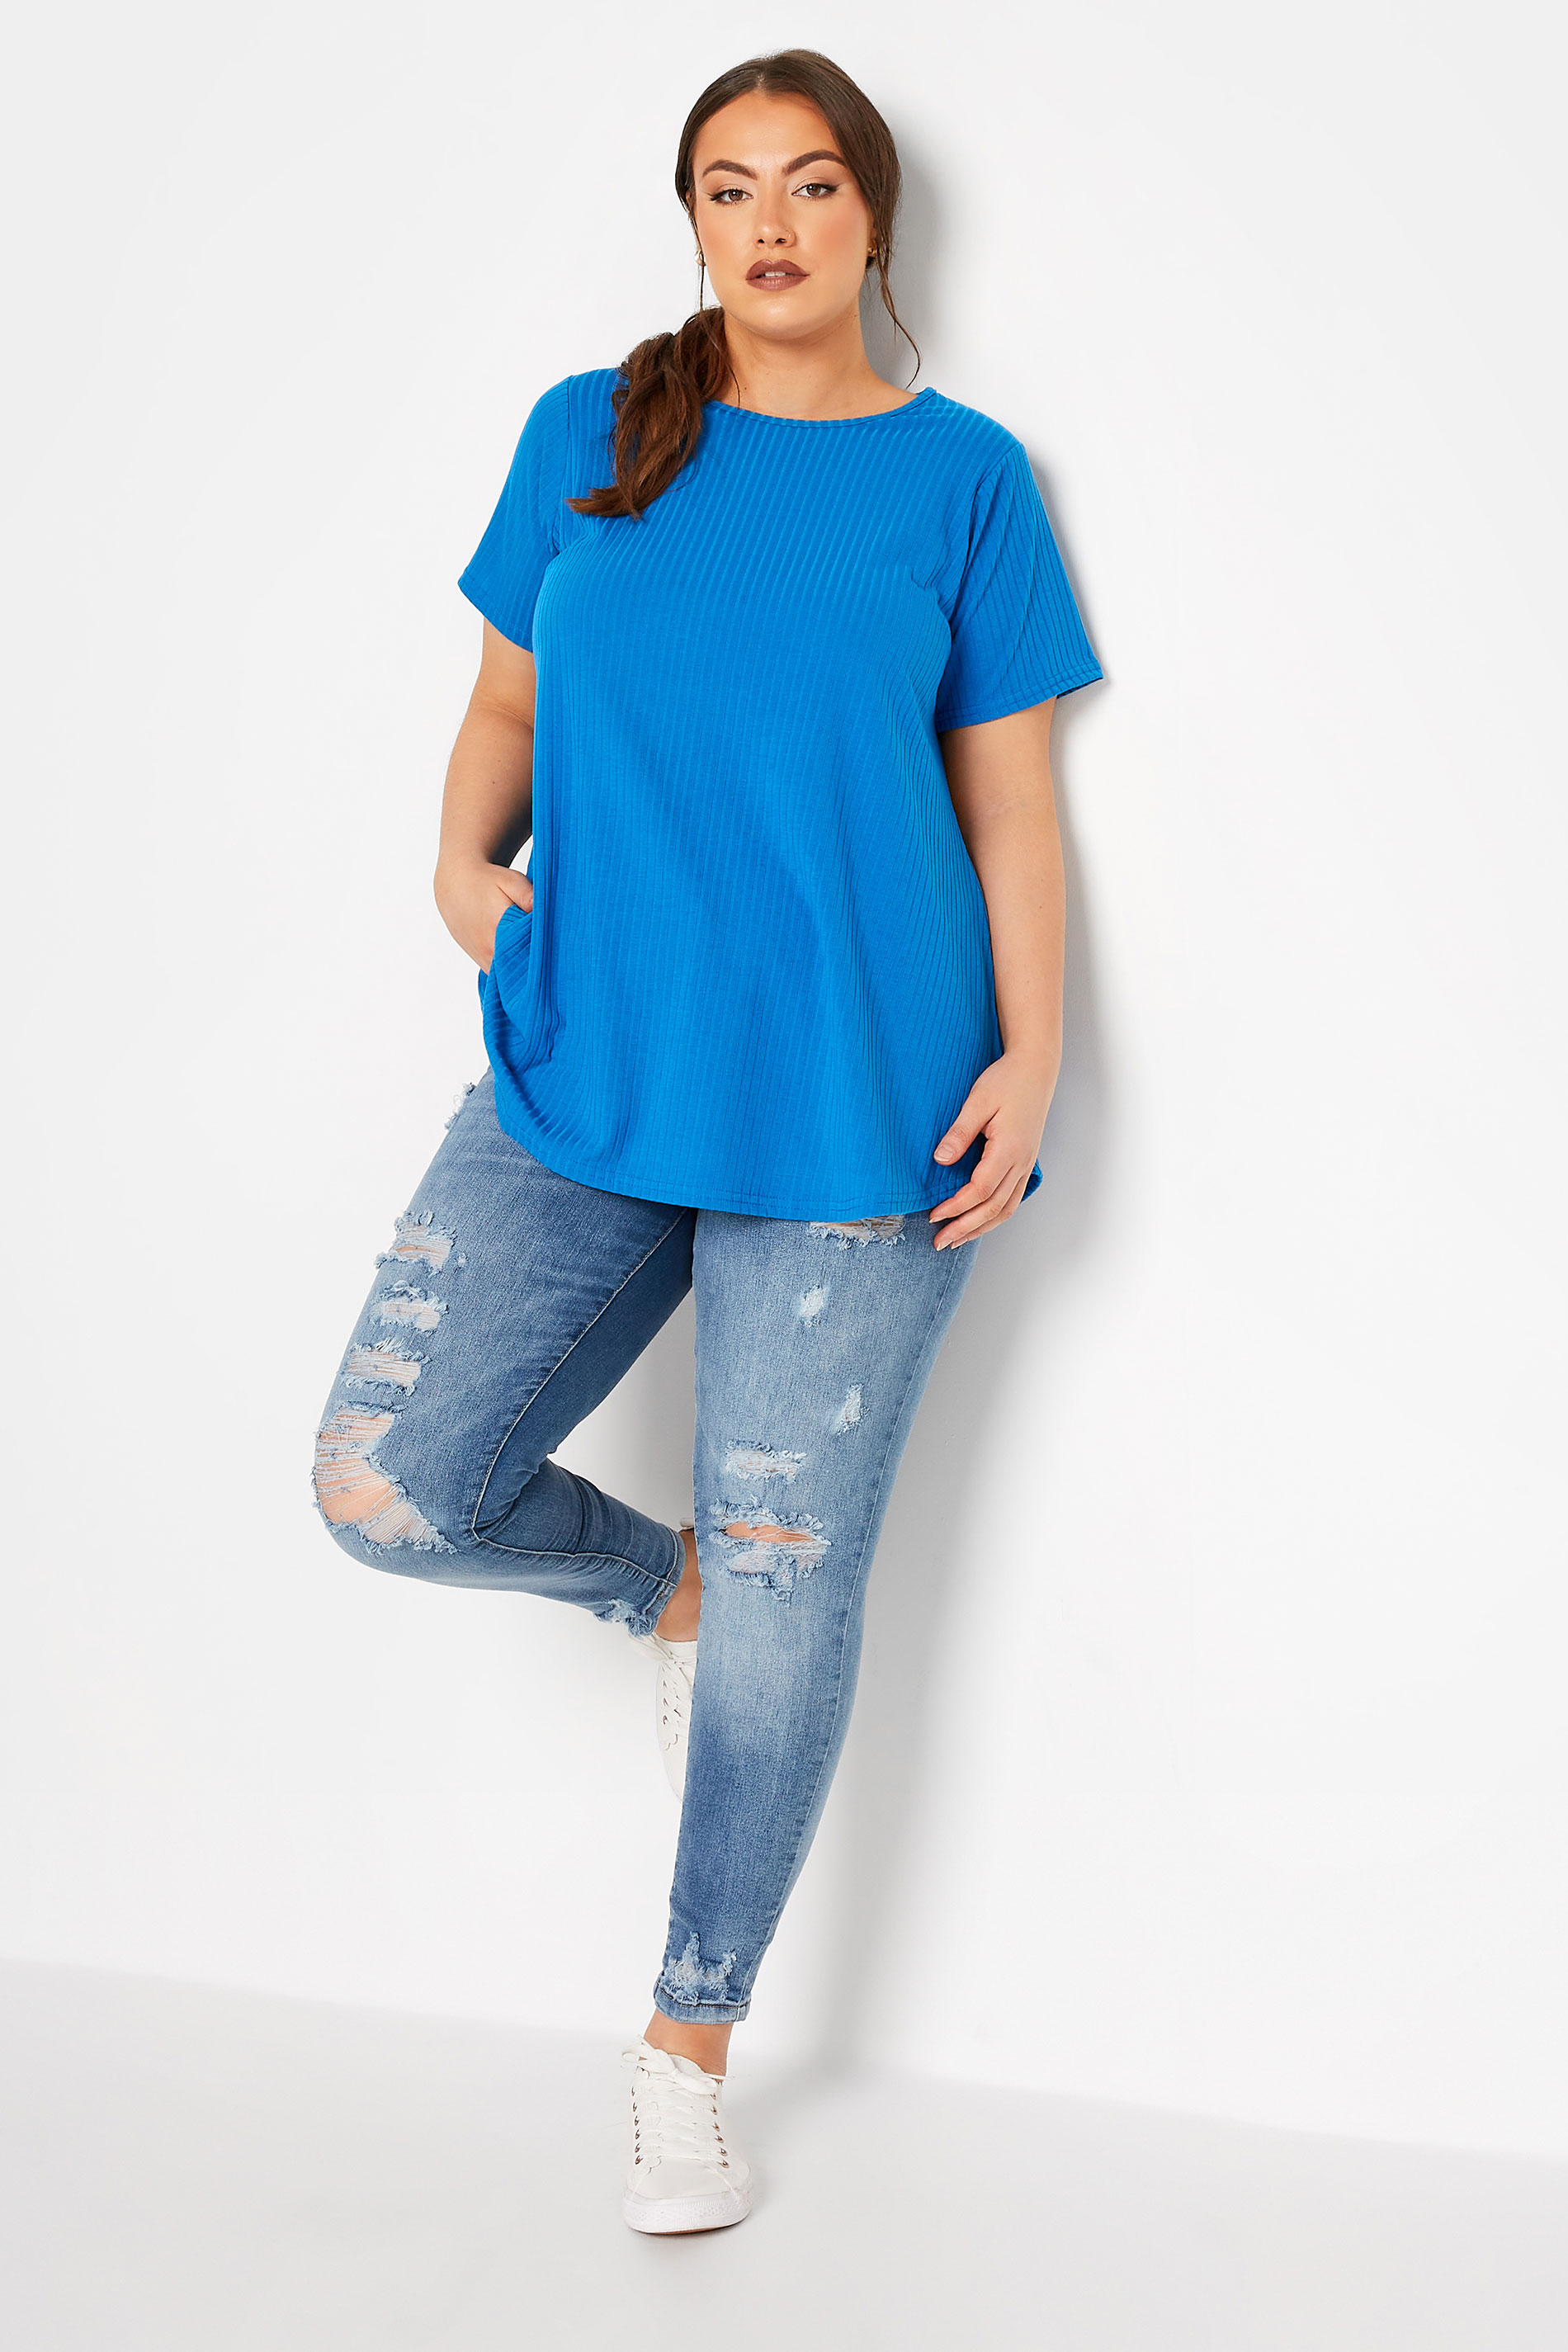 Grande taille  Tops Grande taille  T-Shirts | LIMITED COLLECTION - Top Bleu Roi Nervuré Style Volanté - OW70640